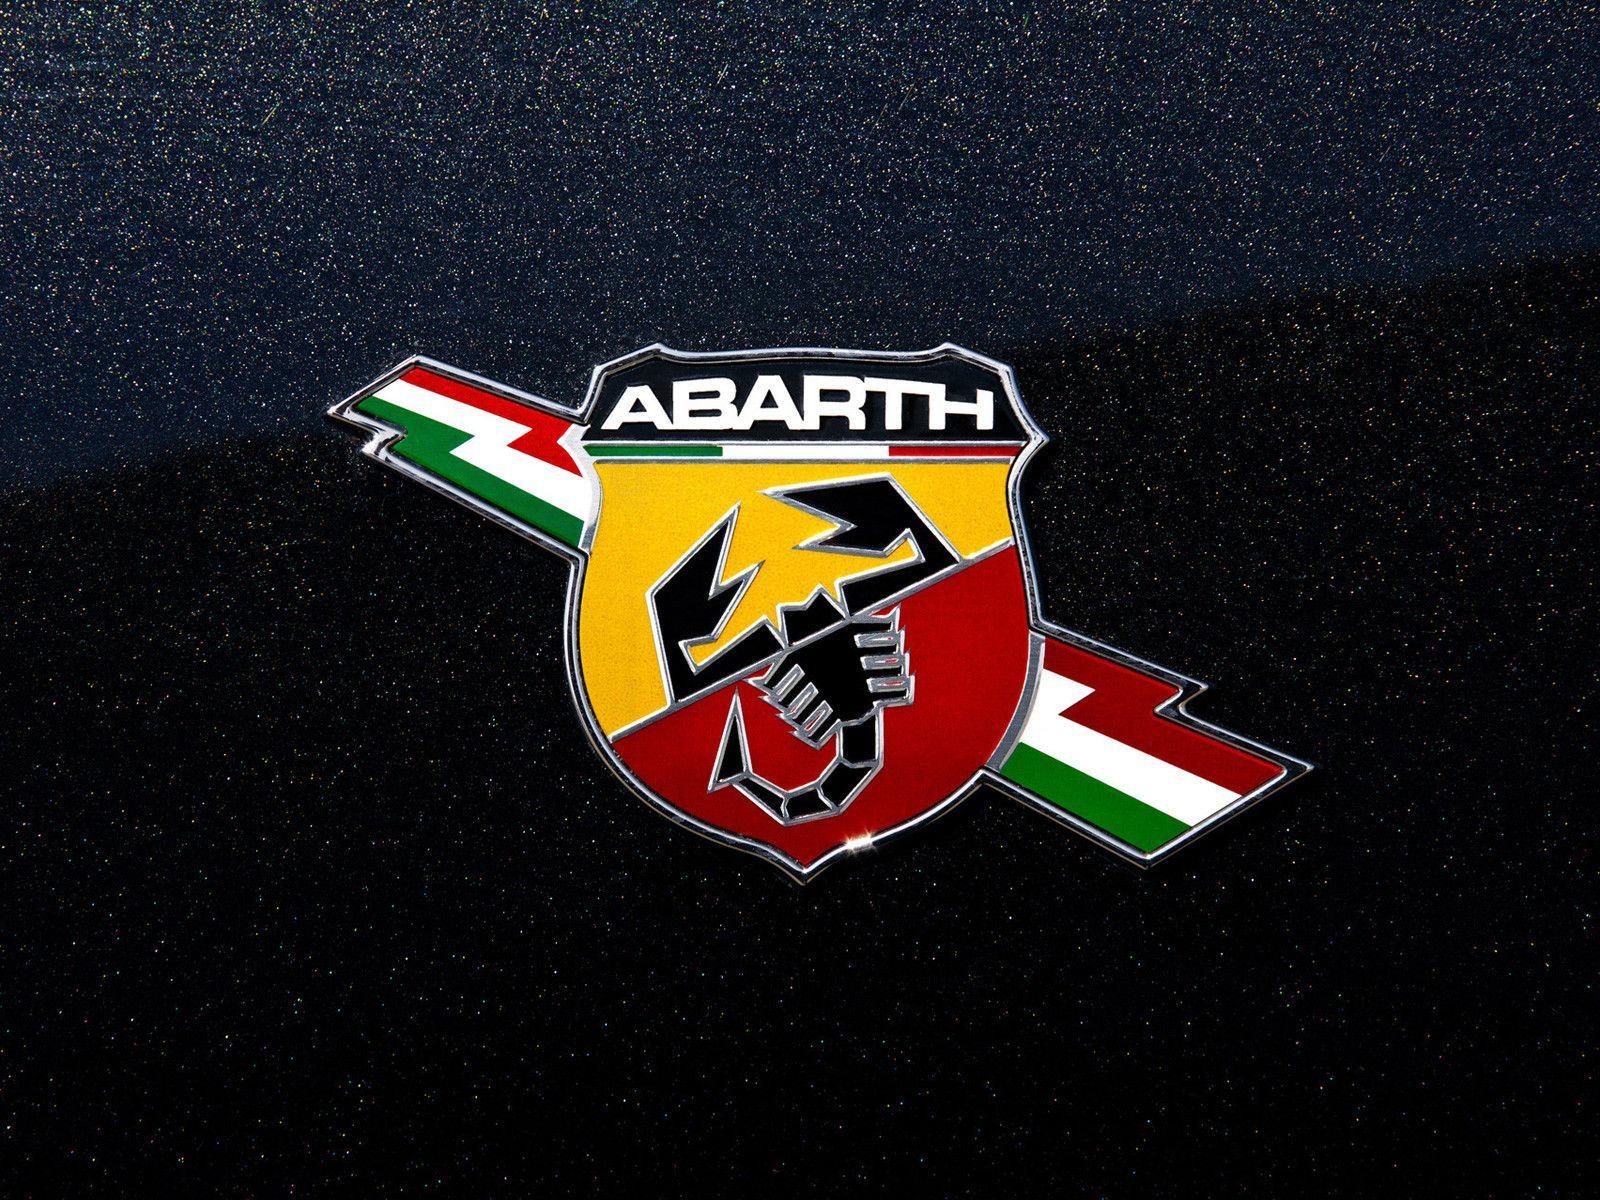 Abarth Car Logos Wallpaper 12892 Hi Resolution. Best Free JPG